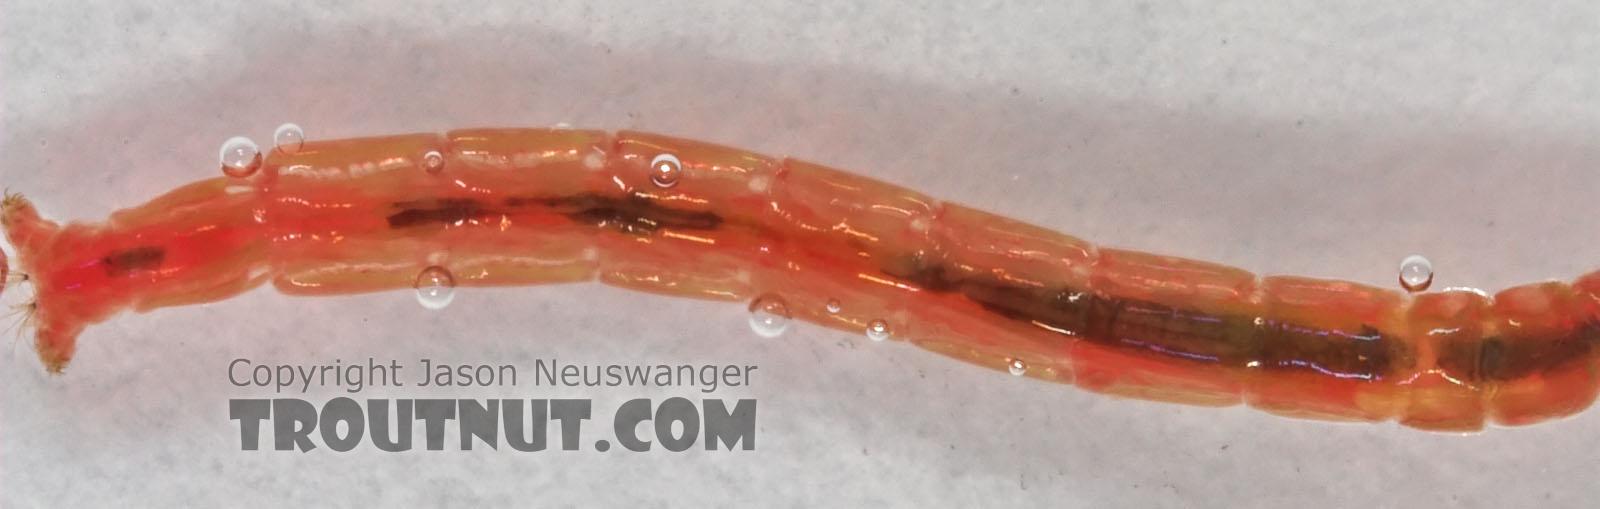 Chironomidae (Midges) Midge Larva from Cascadilla Creek in New York